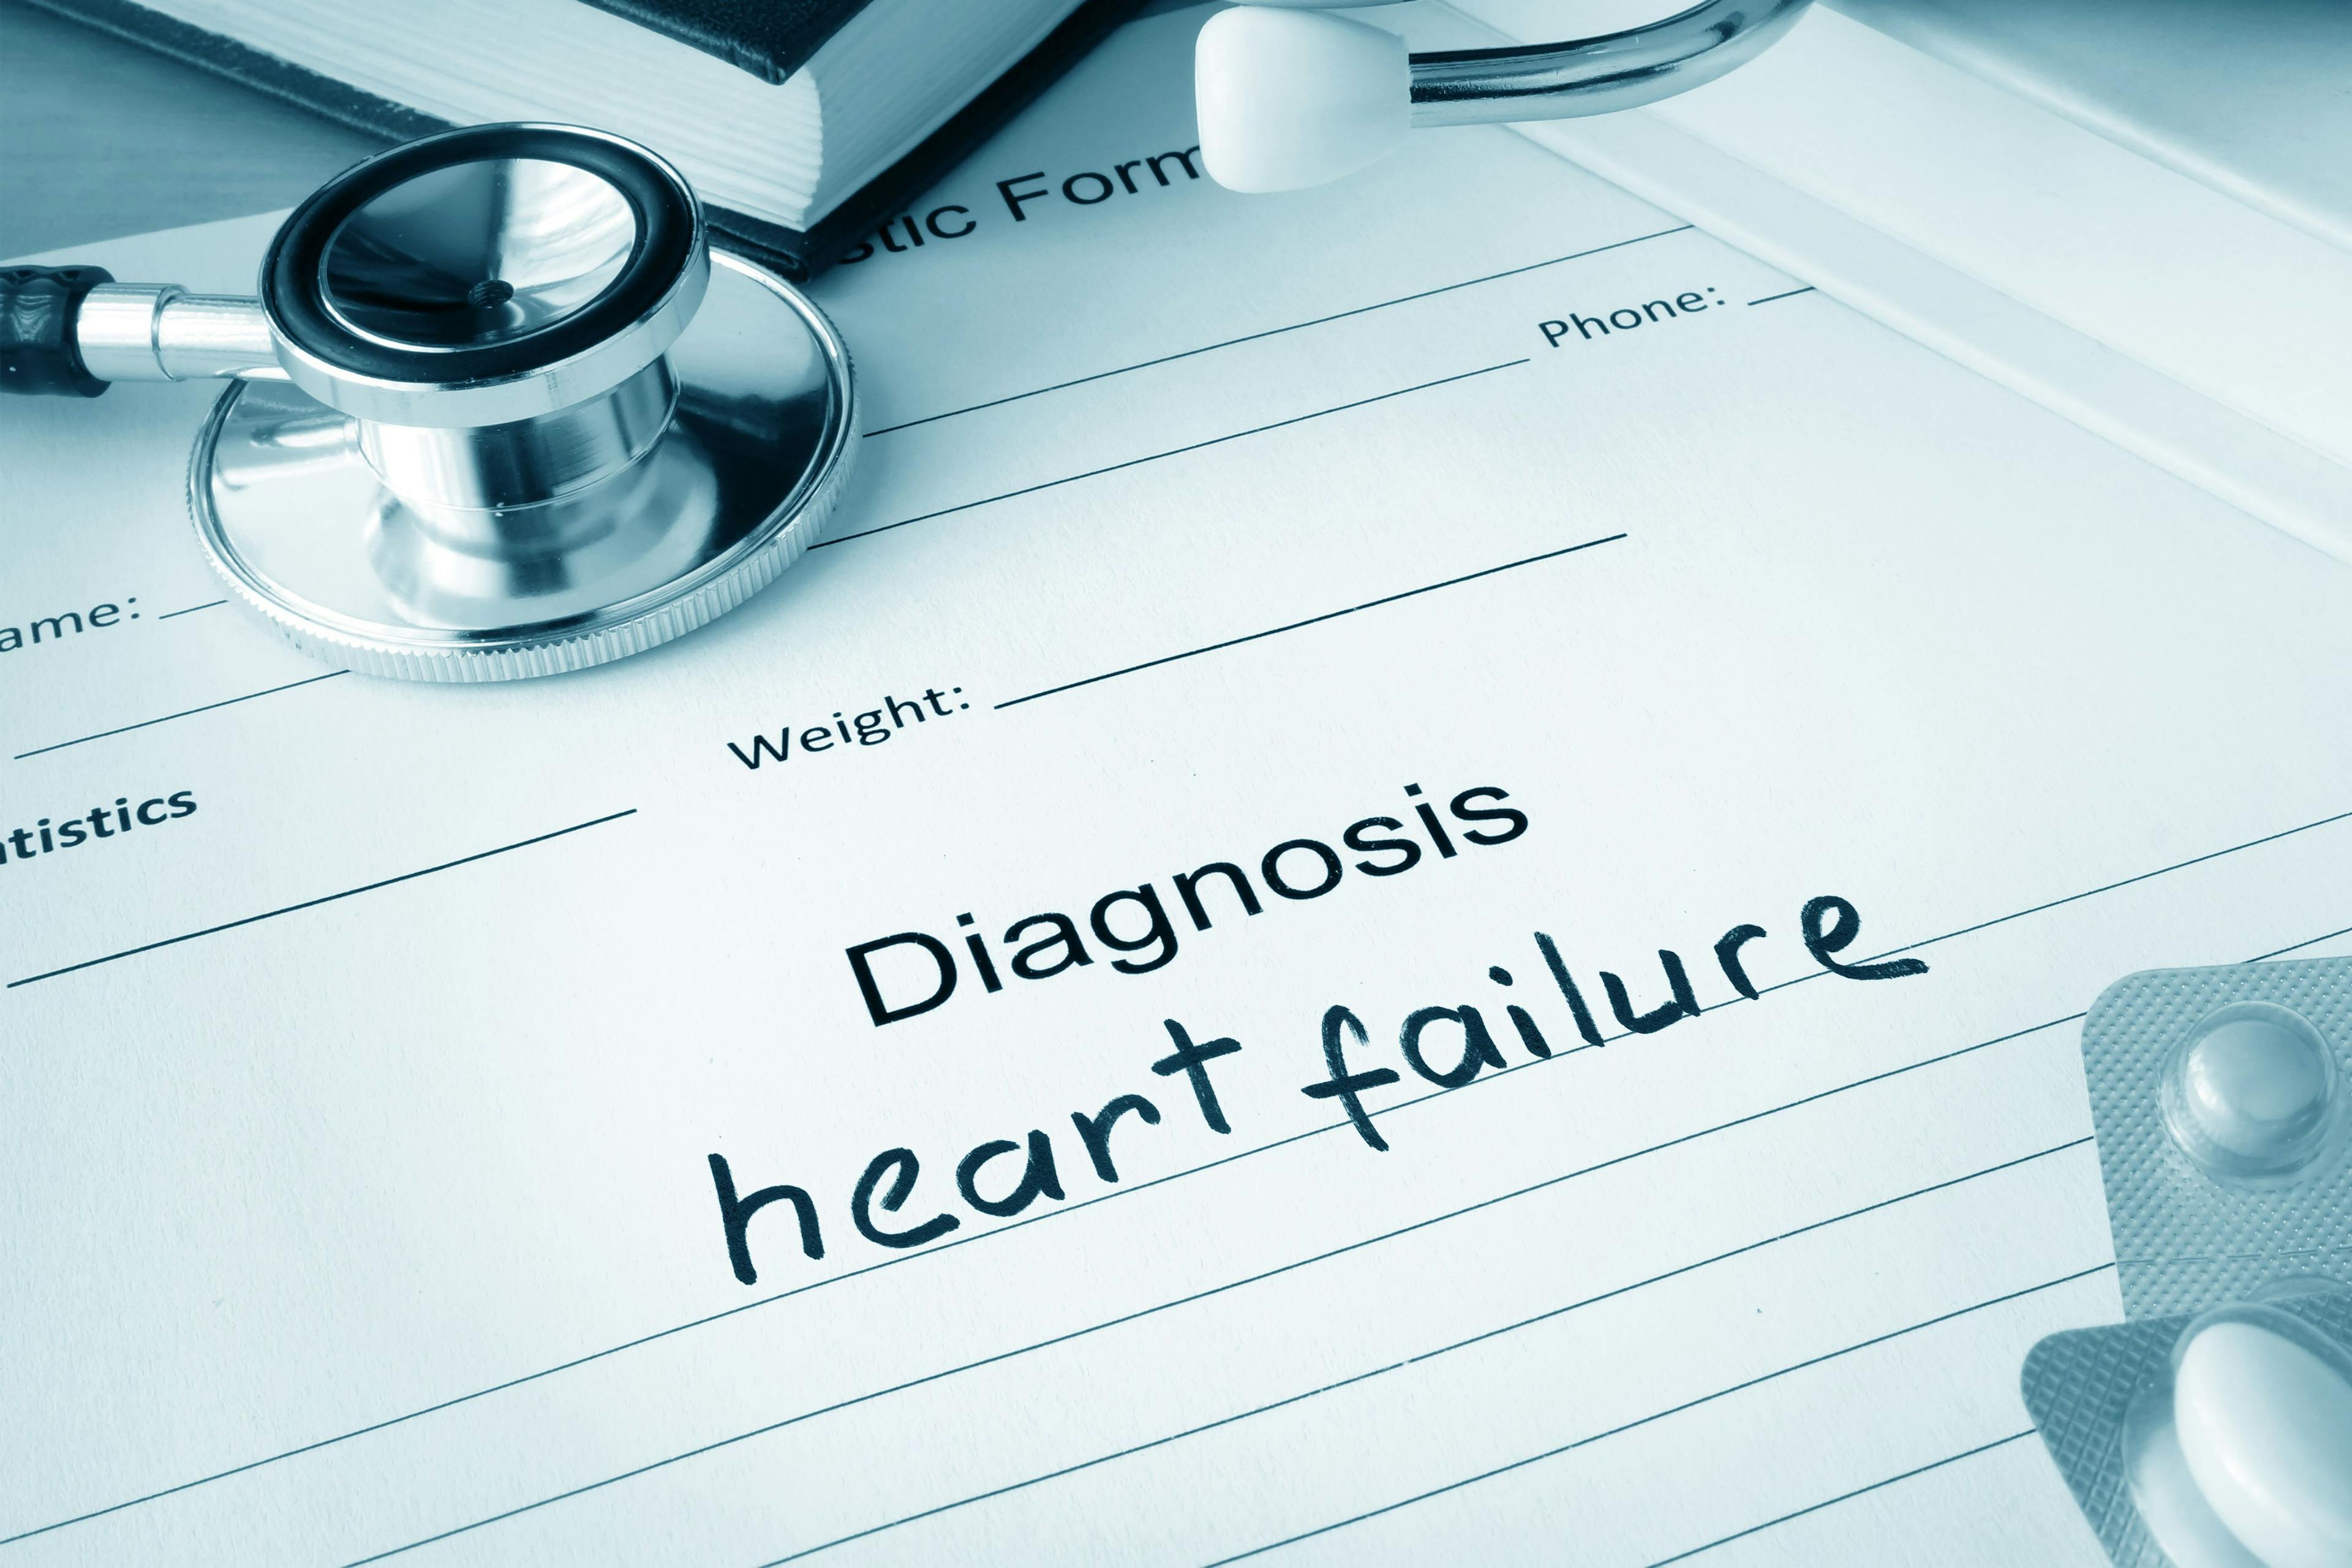 Heart failure stock imagery | Credit: Fotolia